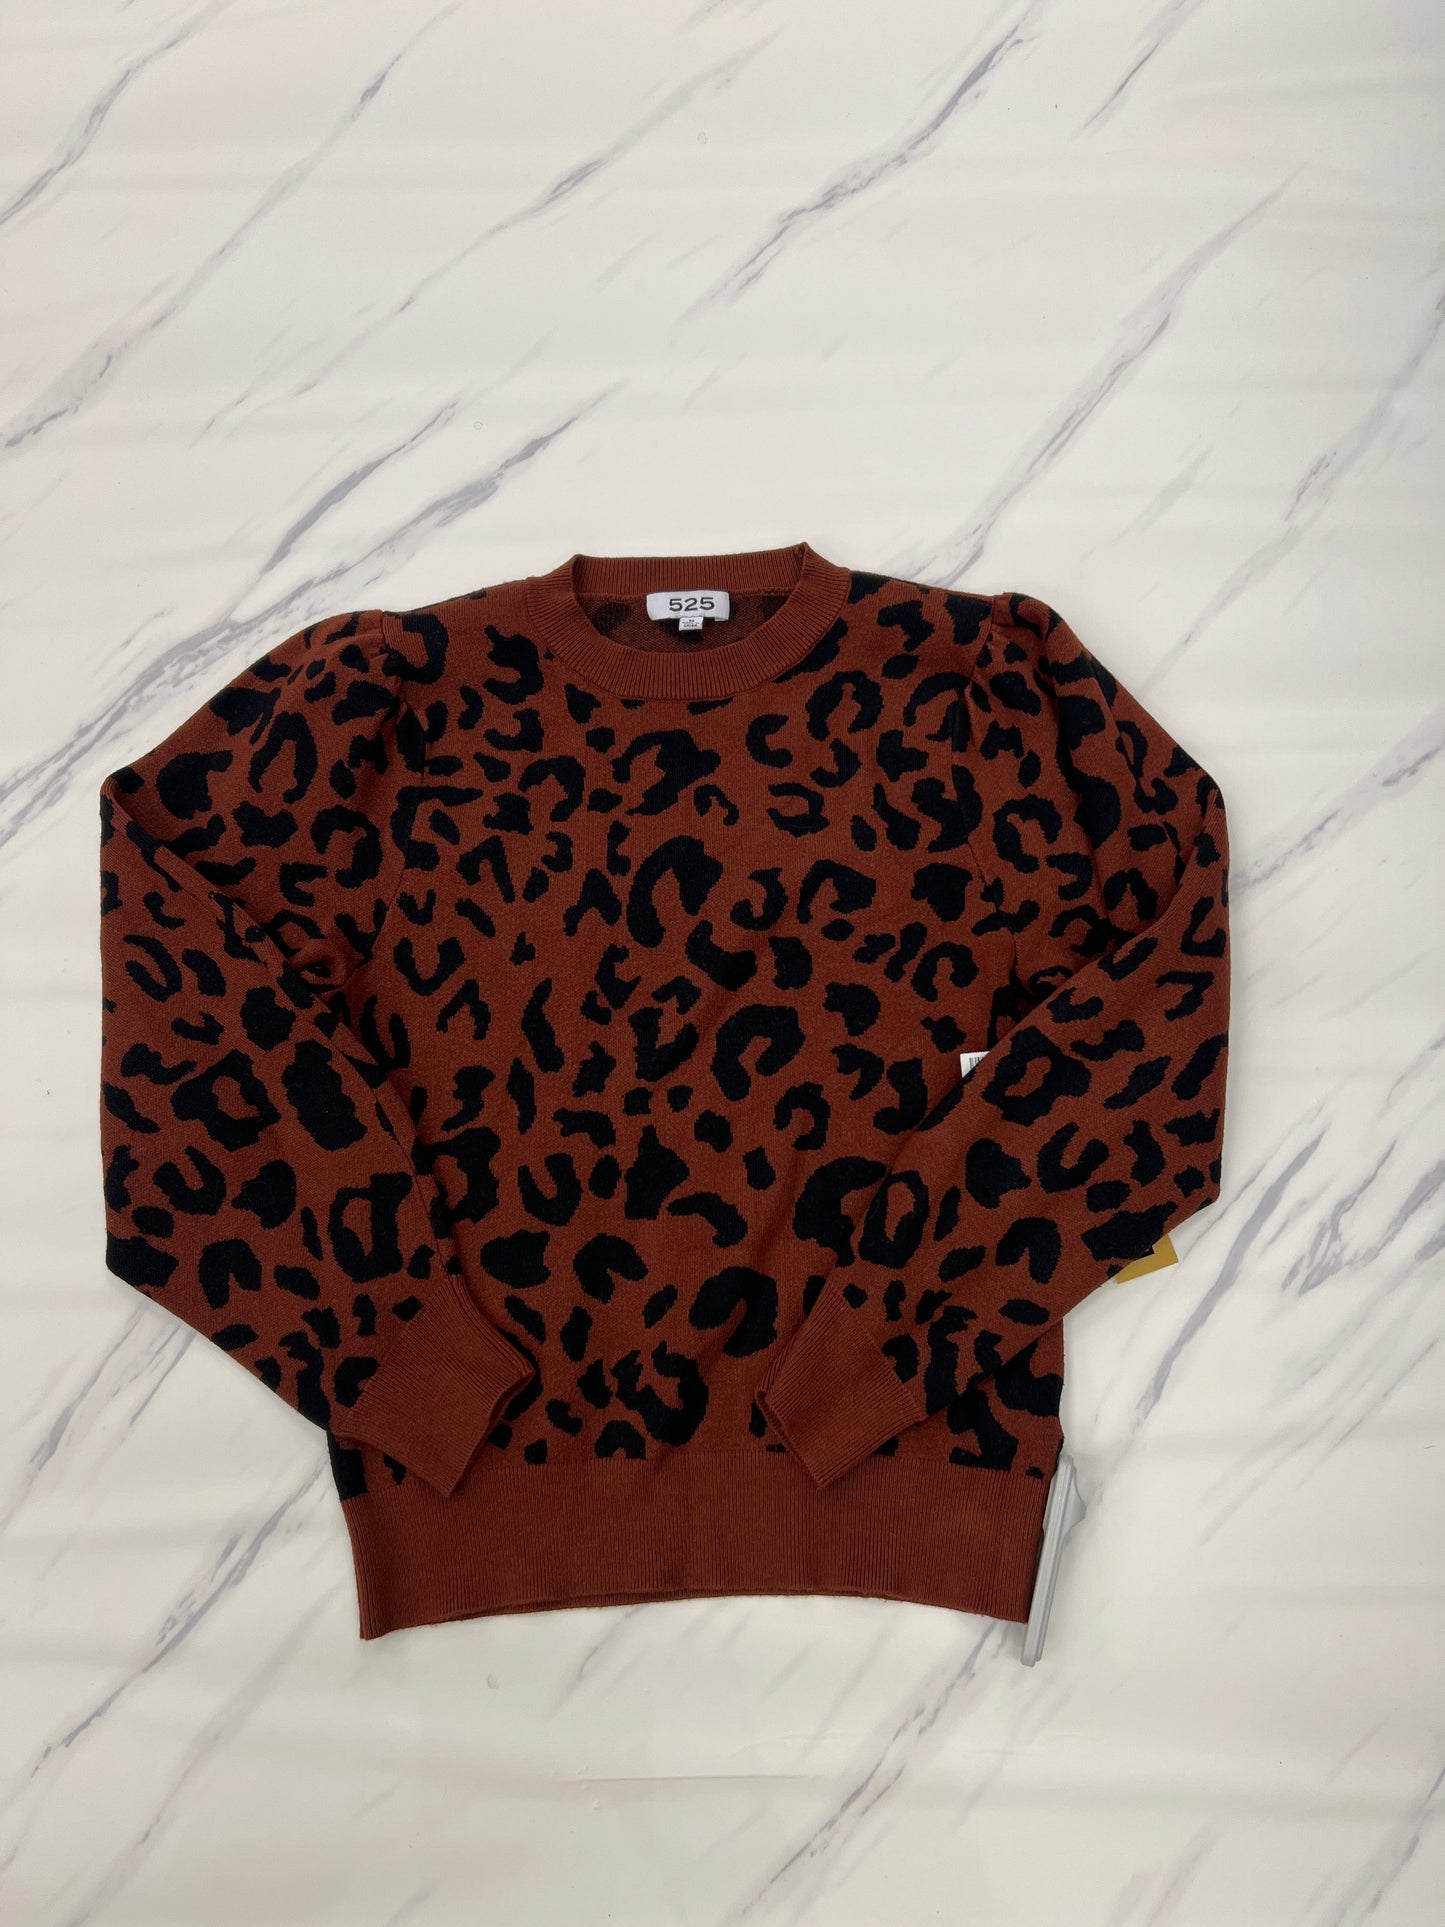 Brown Sweater Designer 525 America, Size M